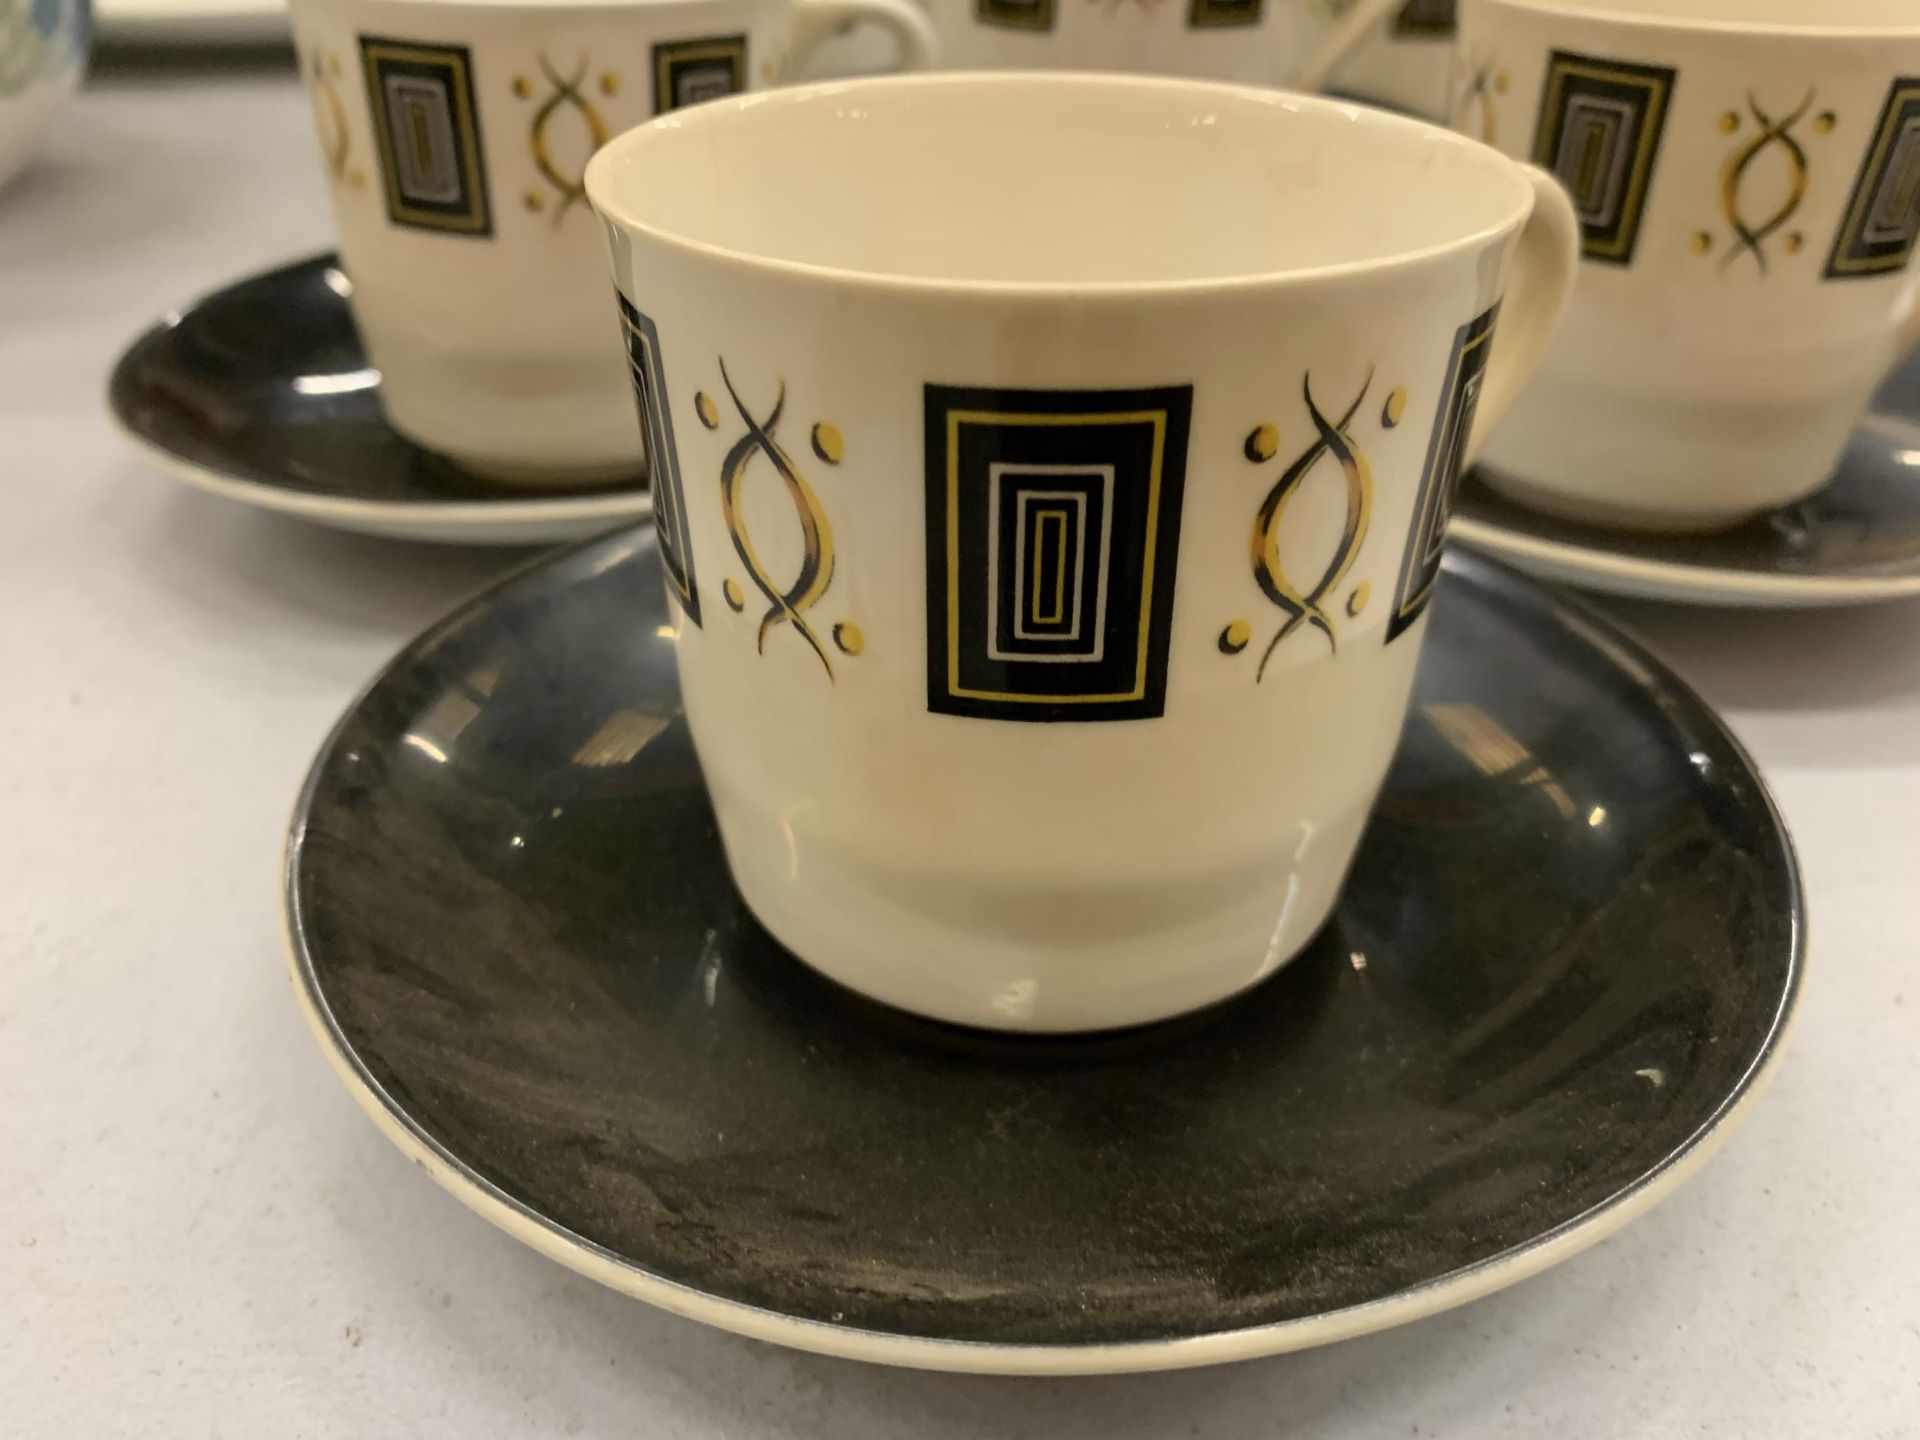 A VINTAGE ROYAL STAFFORD 'MEDICI' COFFEE SET TO INCLUDE A COFFEE POT, CREAM JUG, SUGAR BOWL, CUPS - Image 2 of 3